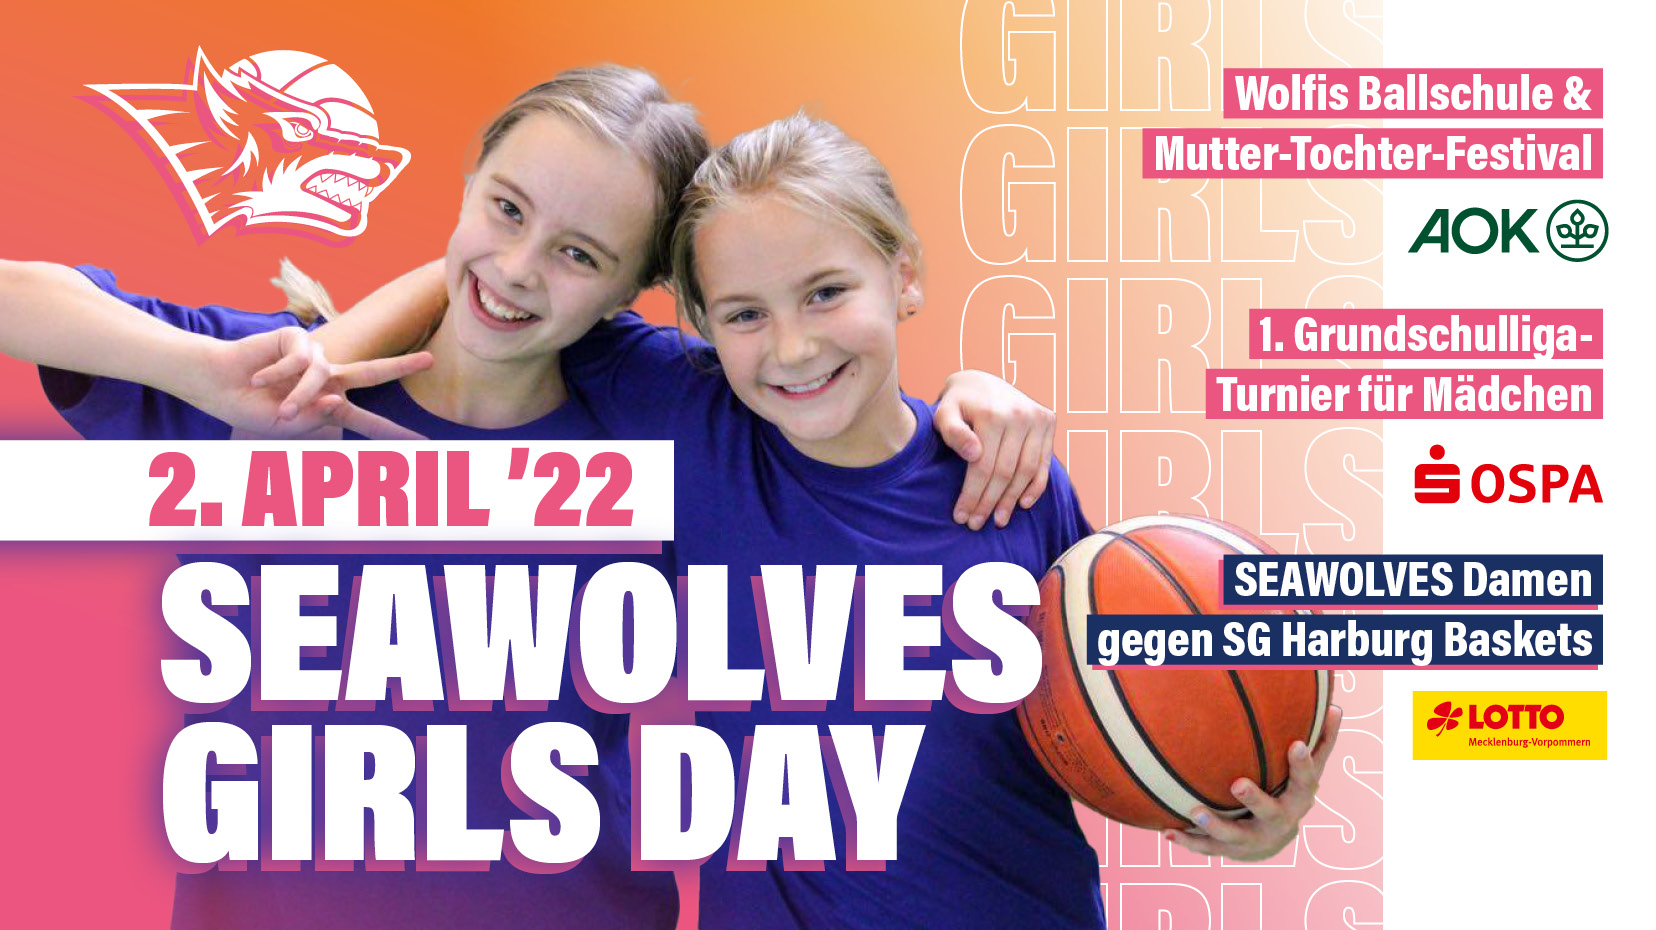 SEAWOLVES GIRLS DAY am 2. April: ein Tag, drei Events